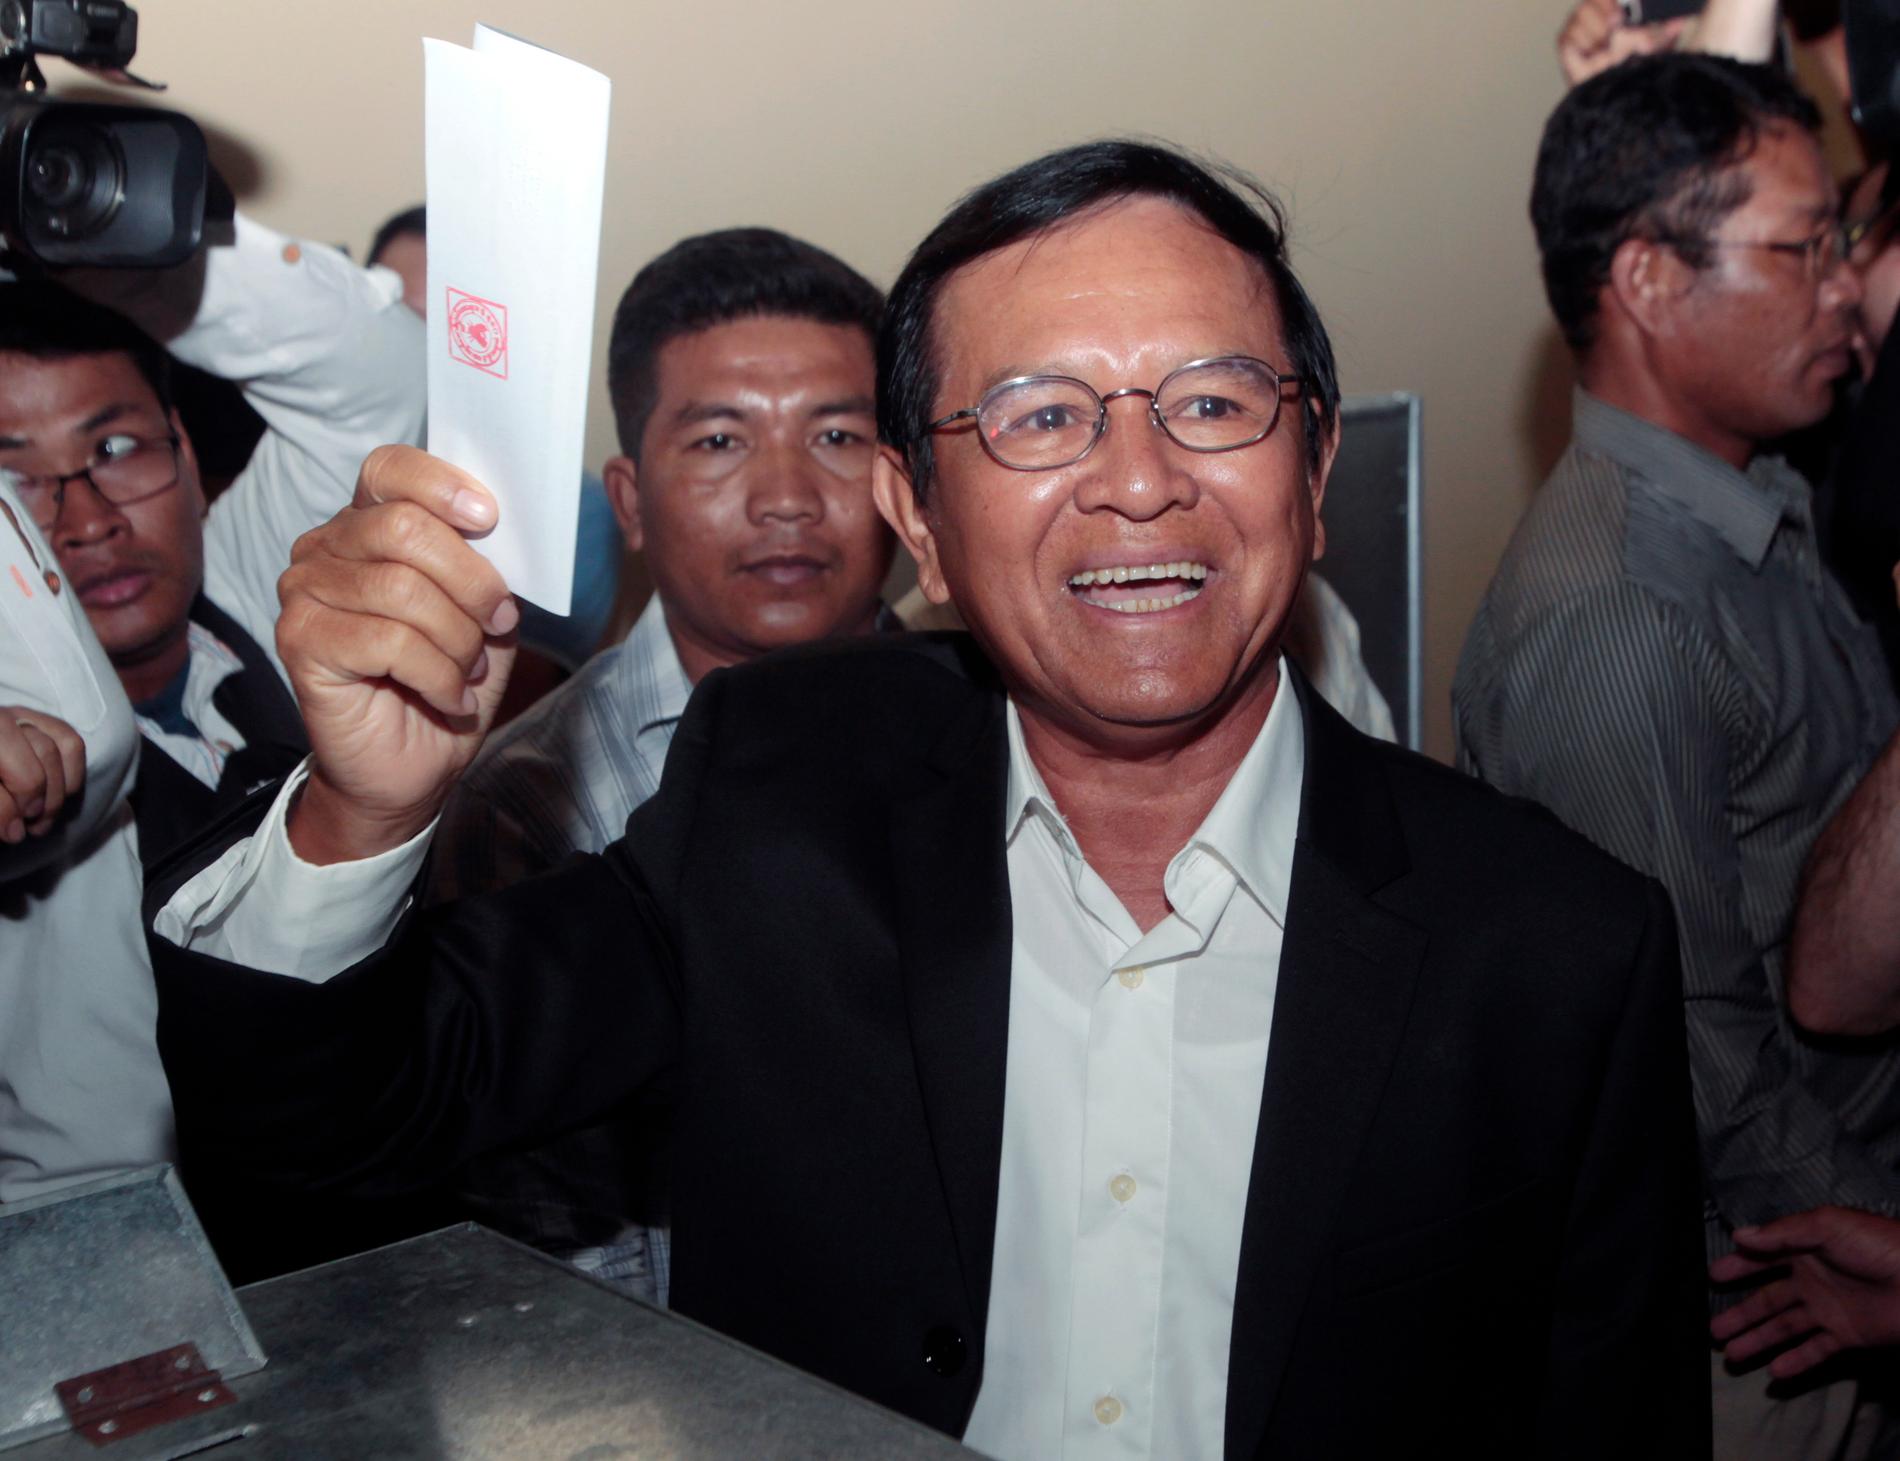 Kambodjas oppositionsledare Kem Sokha. Arkivbild.